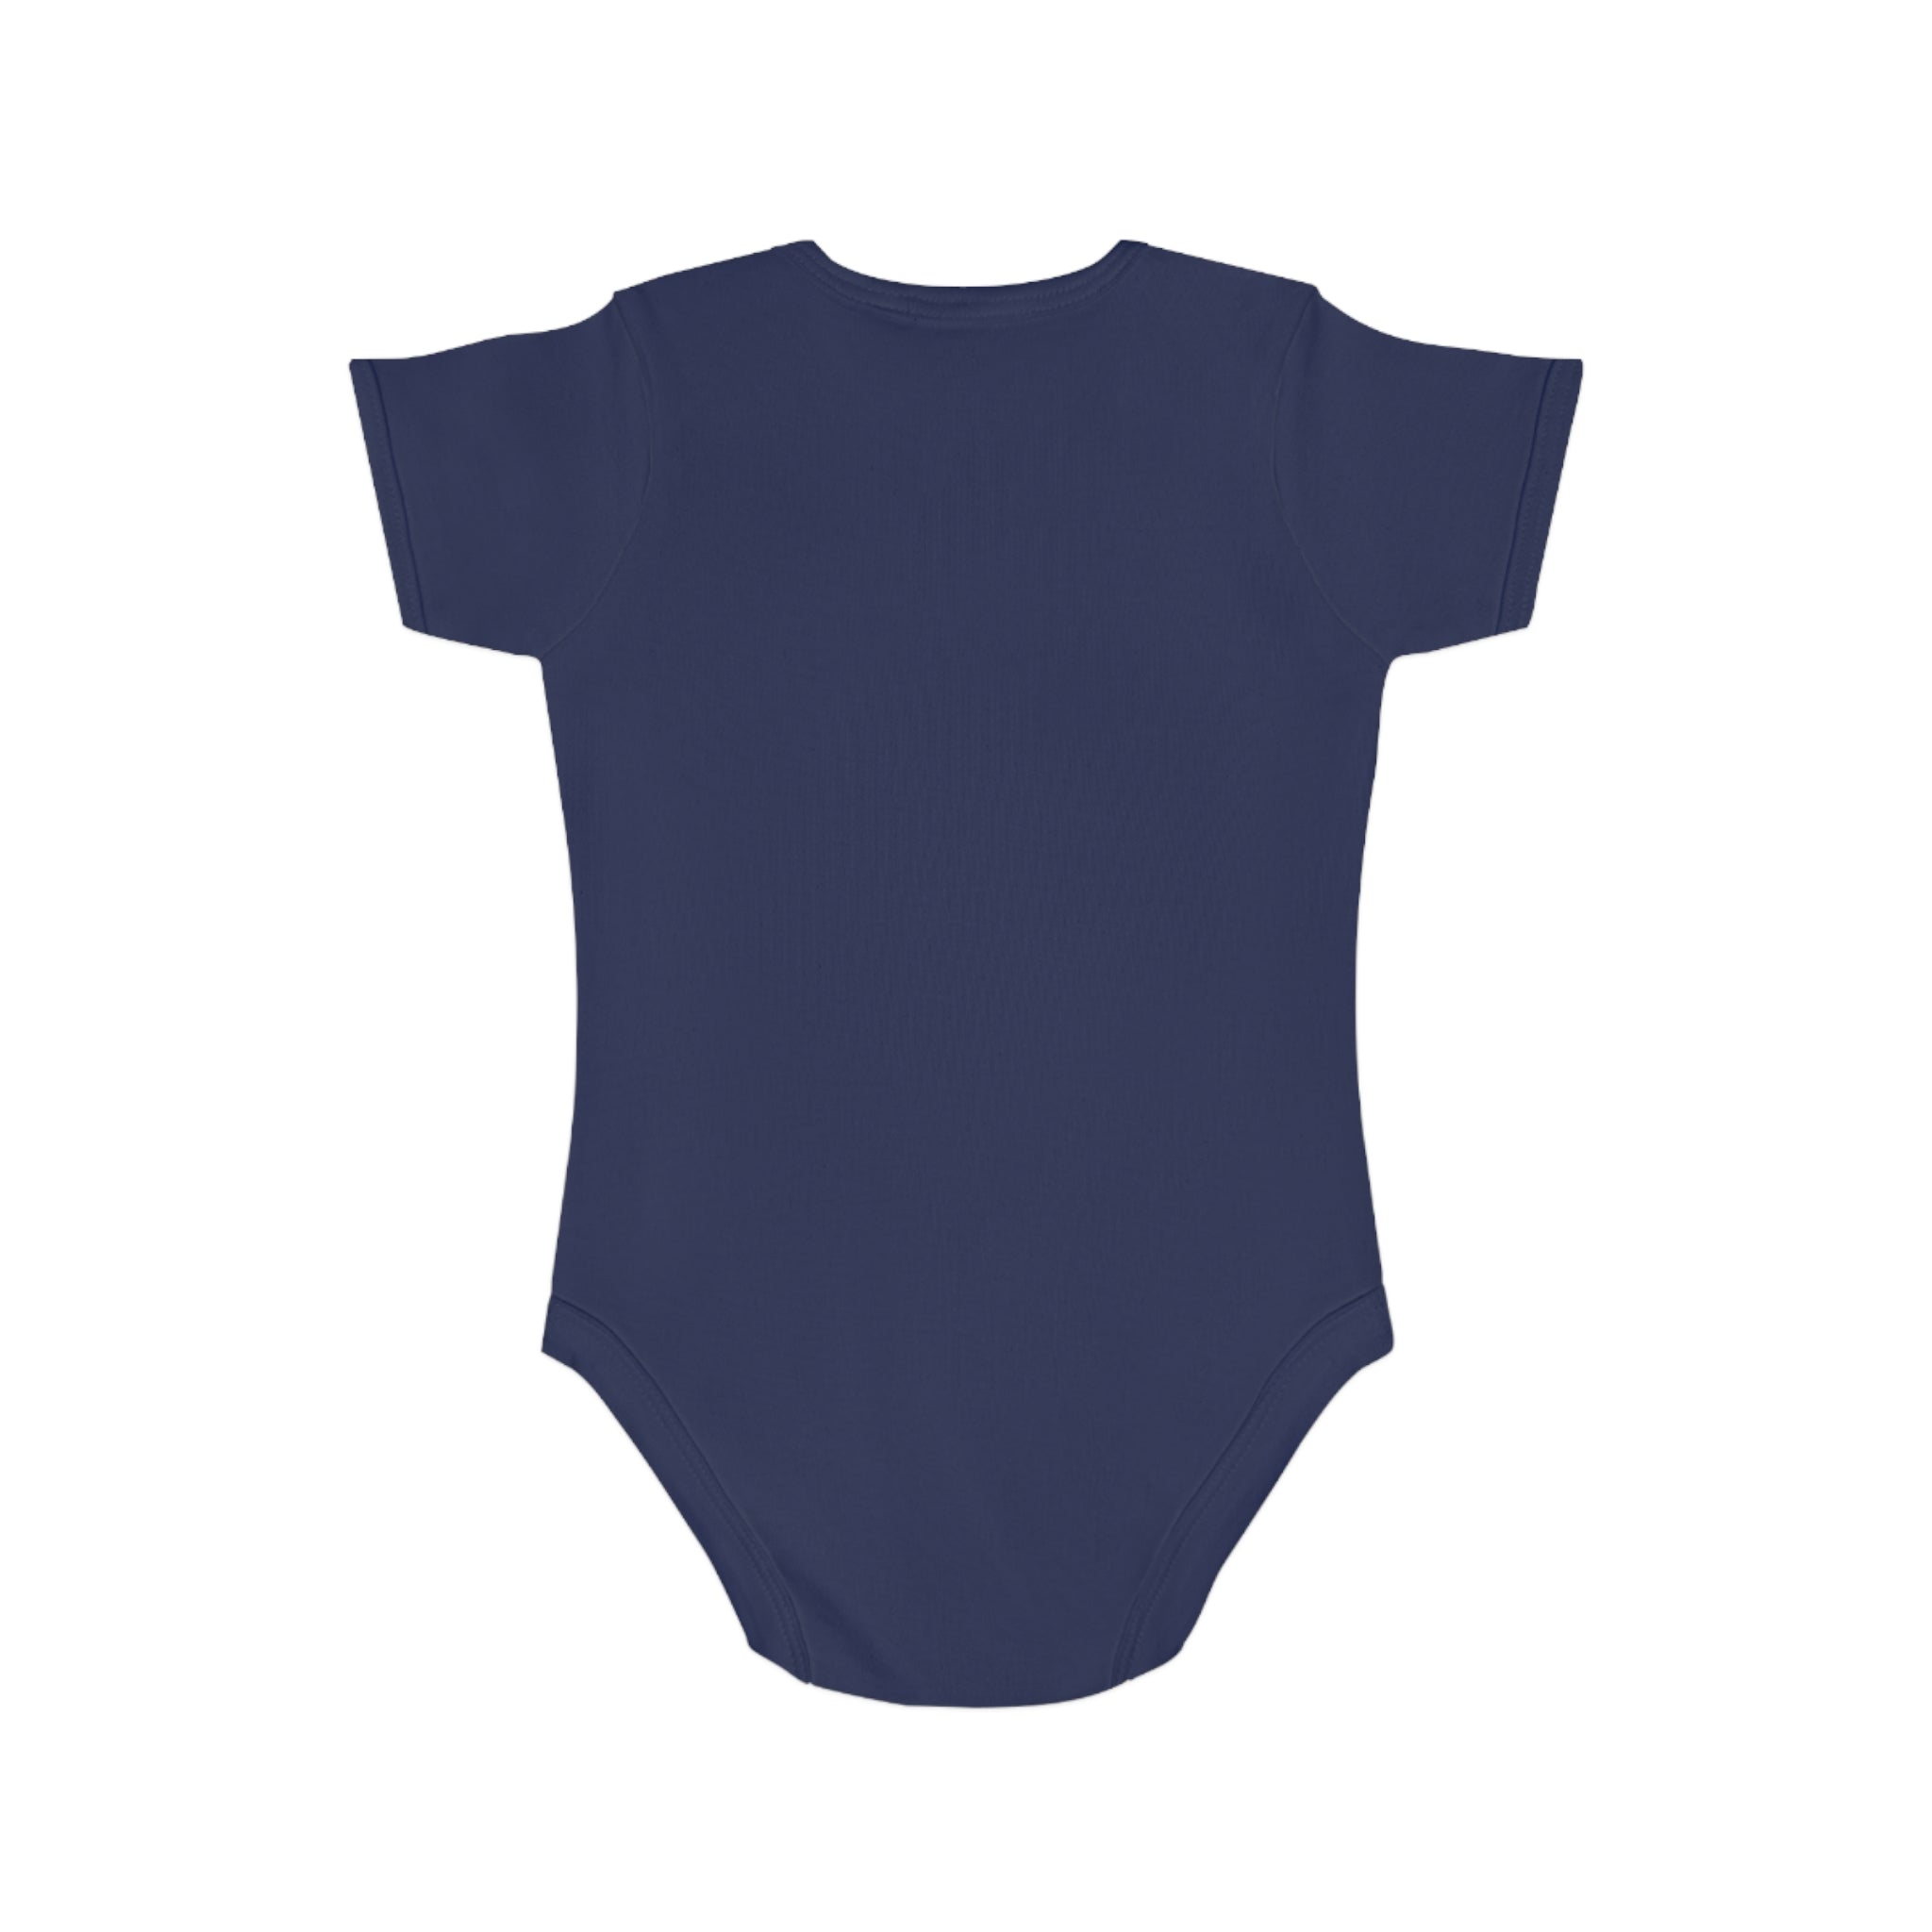 Navy blue onesie for babies